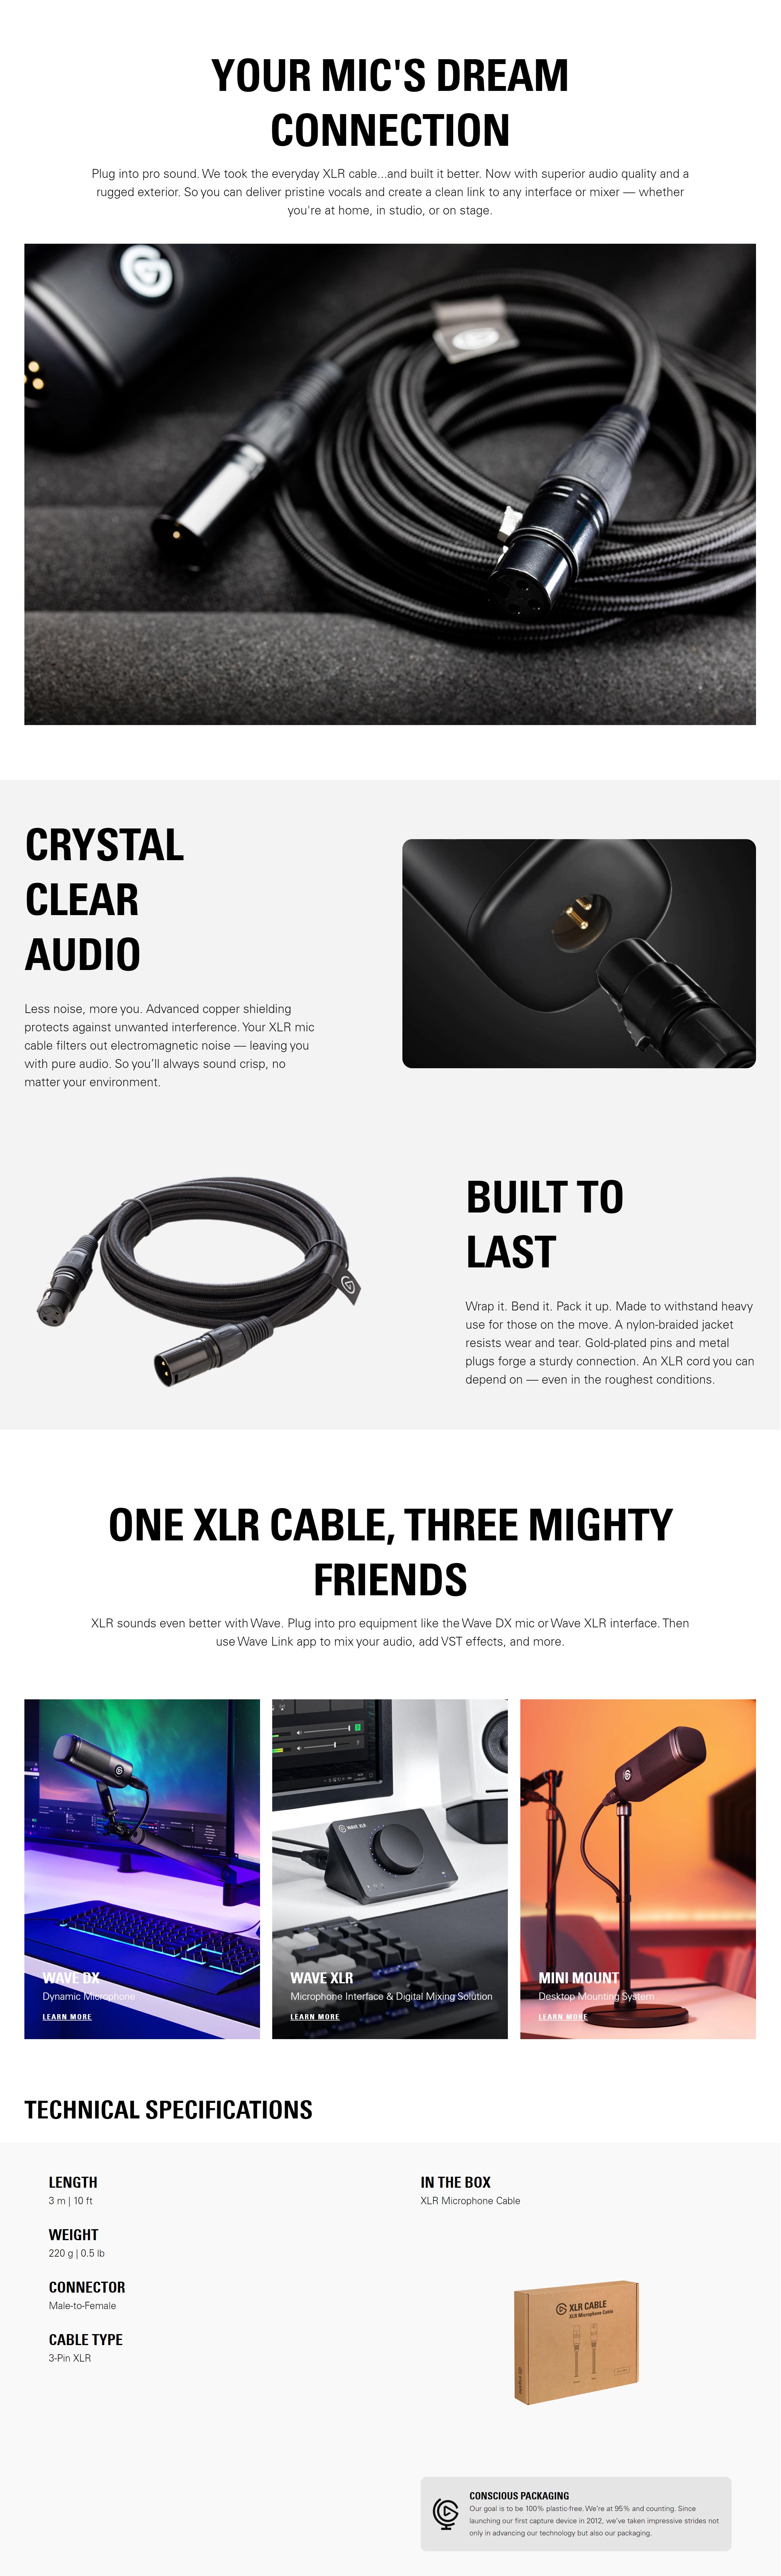 Elgato 10' XLR Microphone Cable Black 10CAL9901 - Best Buy